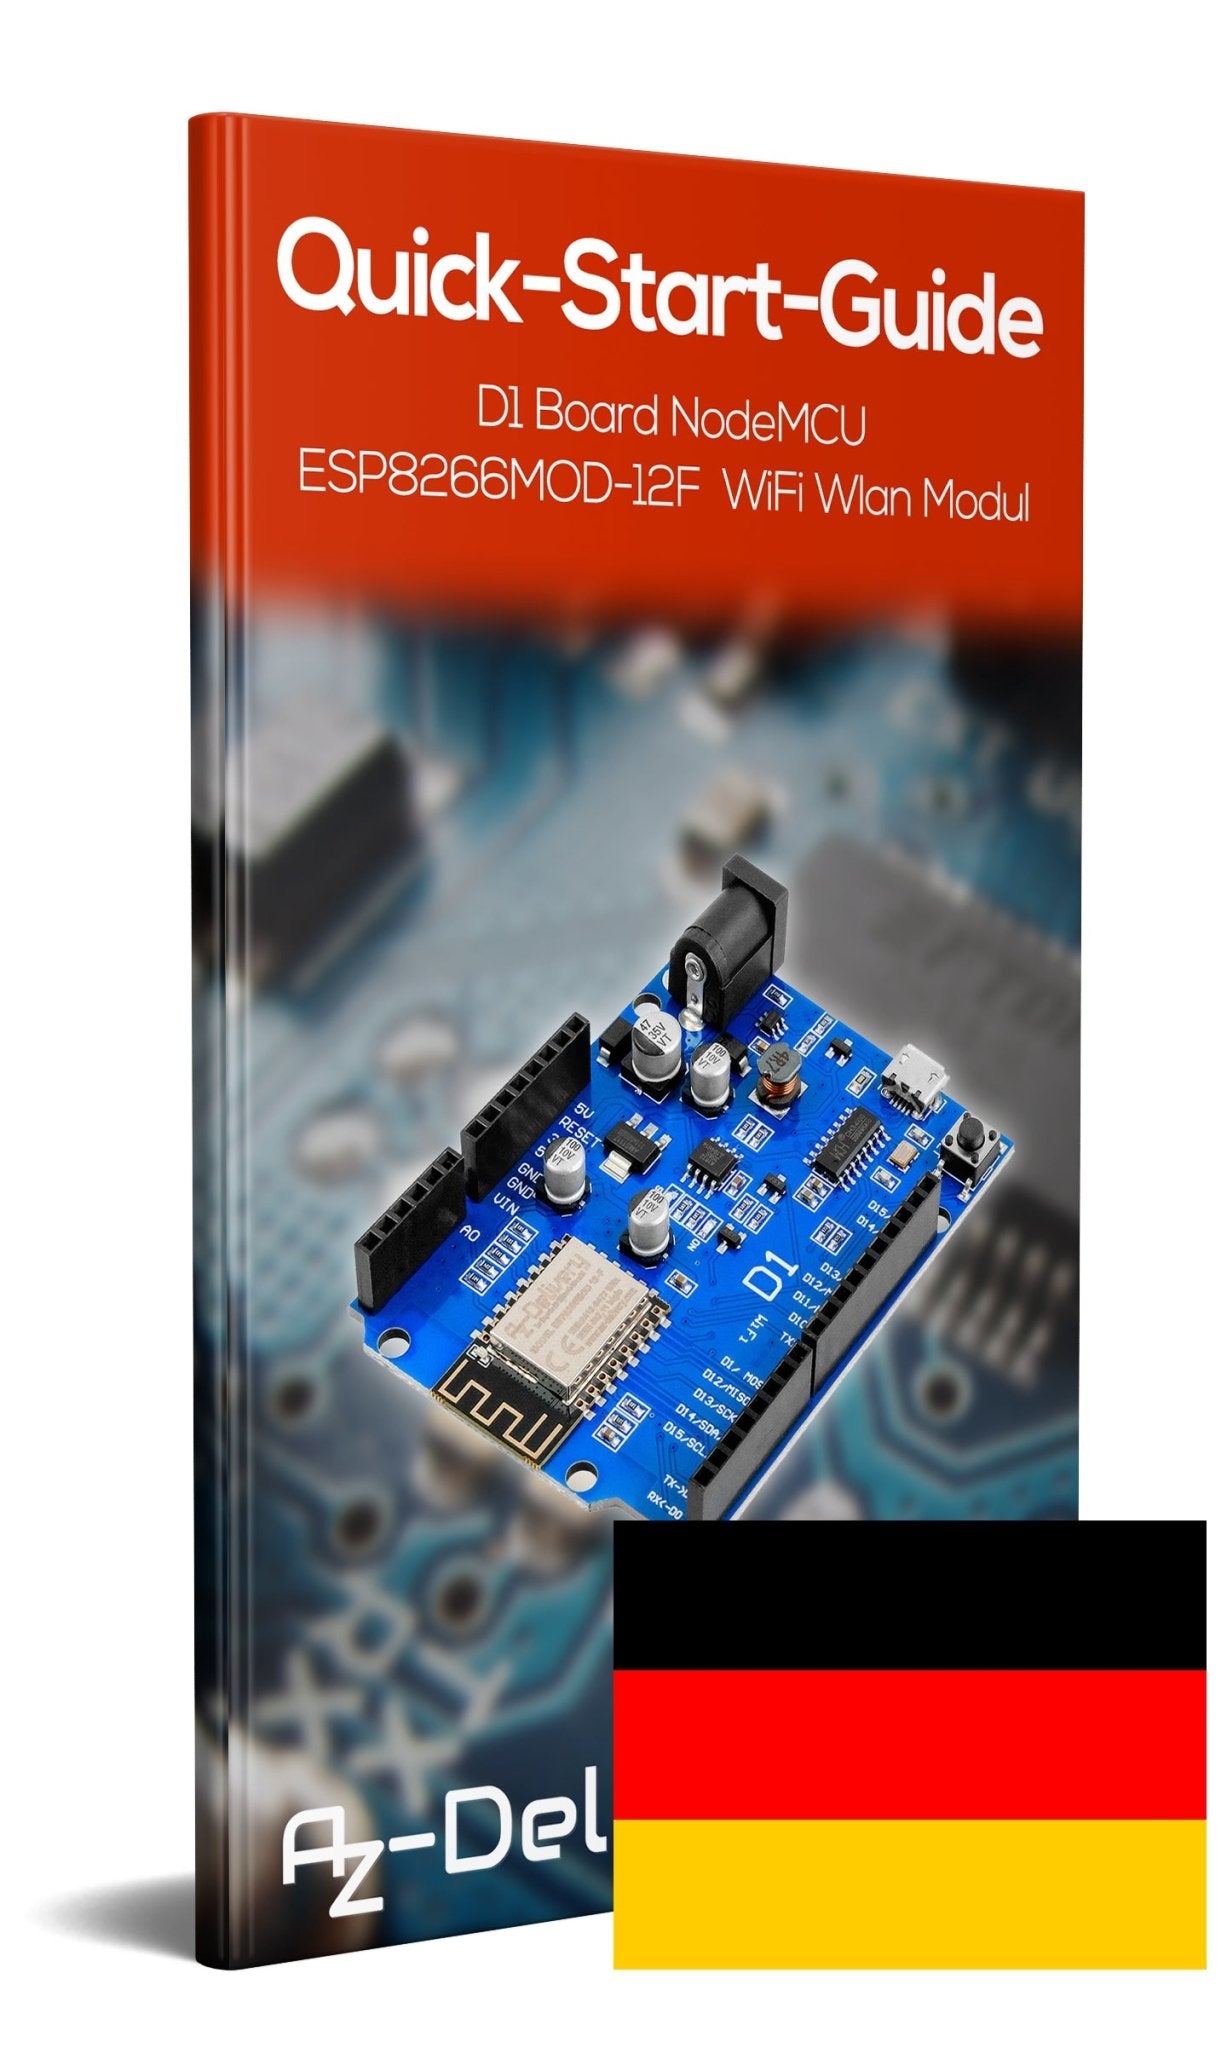 D1 Board NodeMCU ESP8266MOD-12F WiFi Wlan Modul - AZ-Delivery